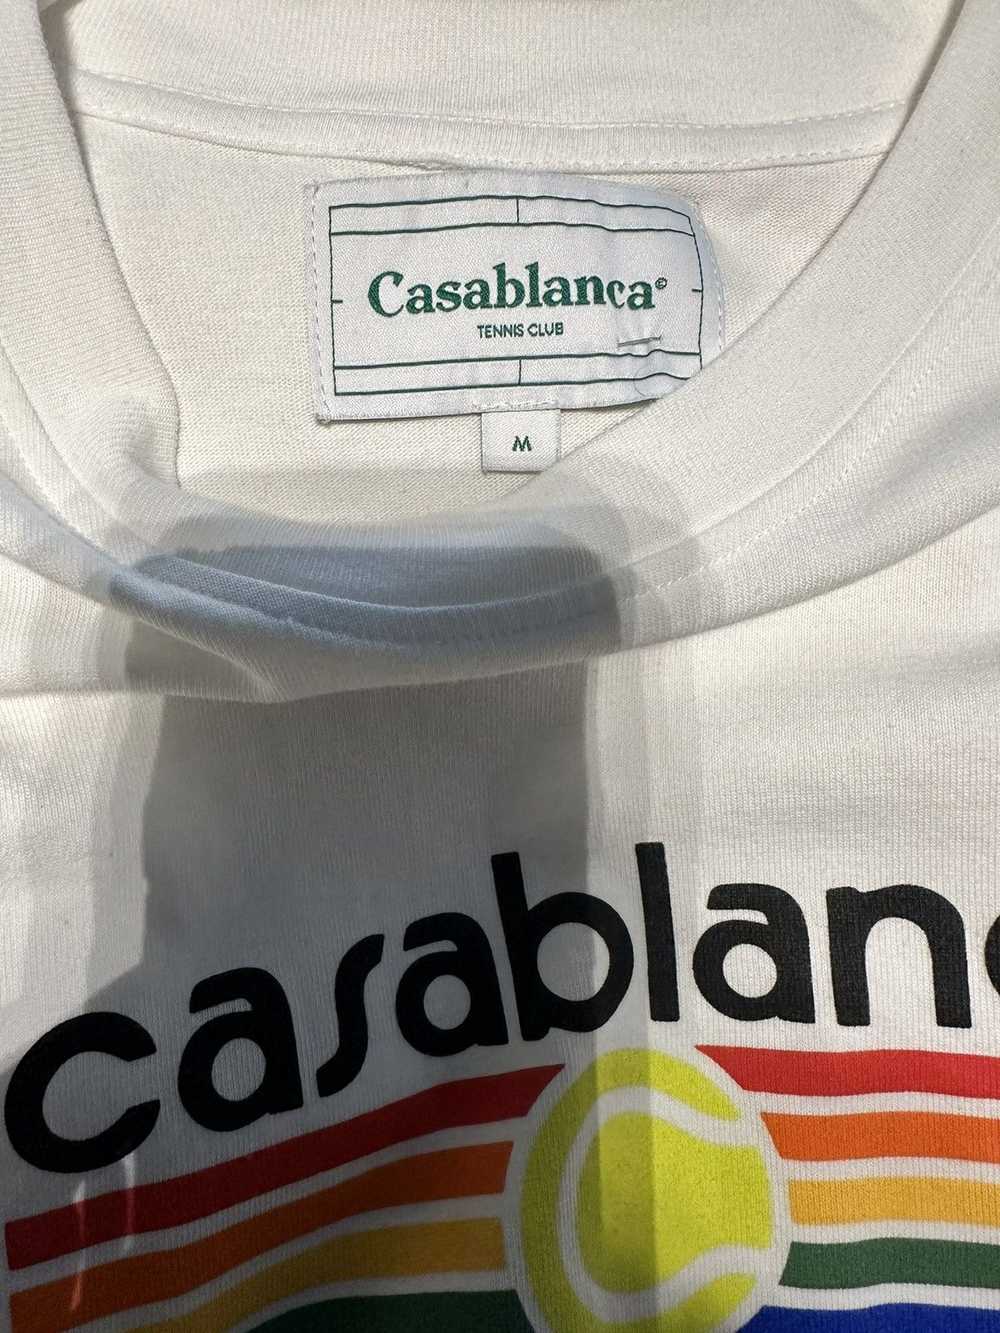 Casablanca Casablanca tennis club t shirt - image 4